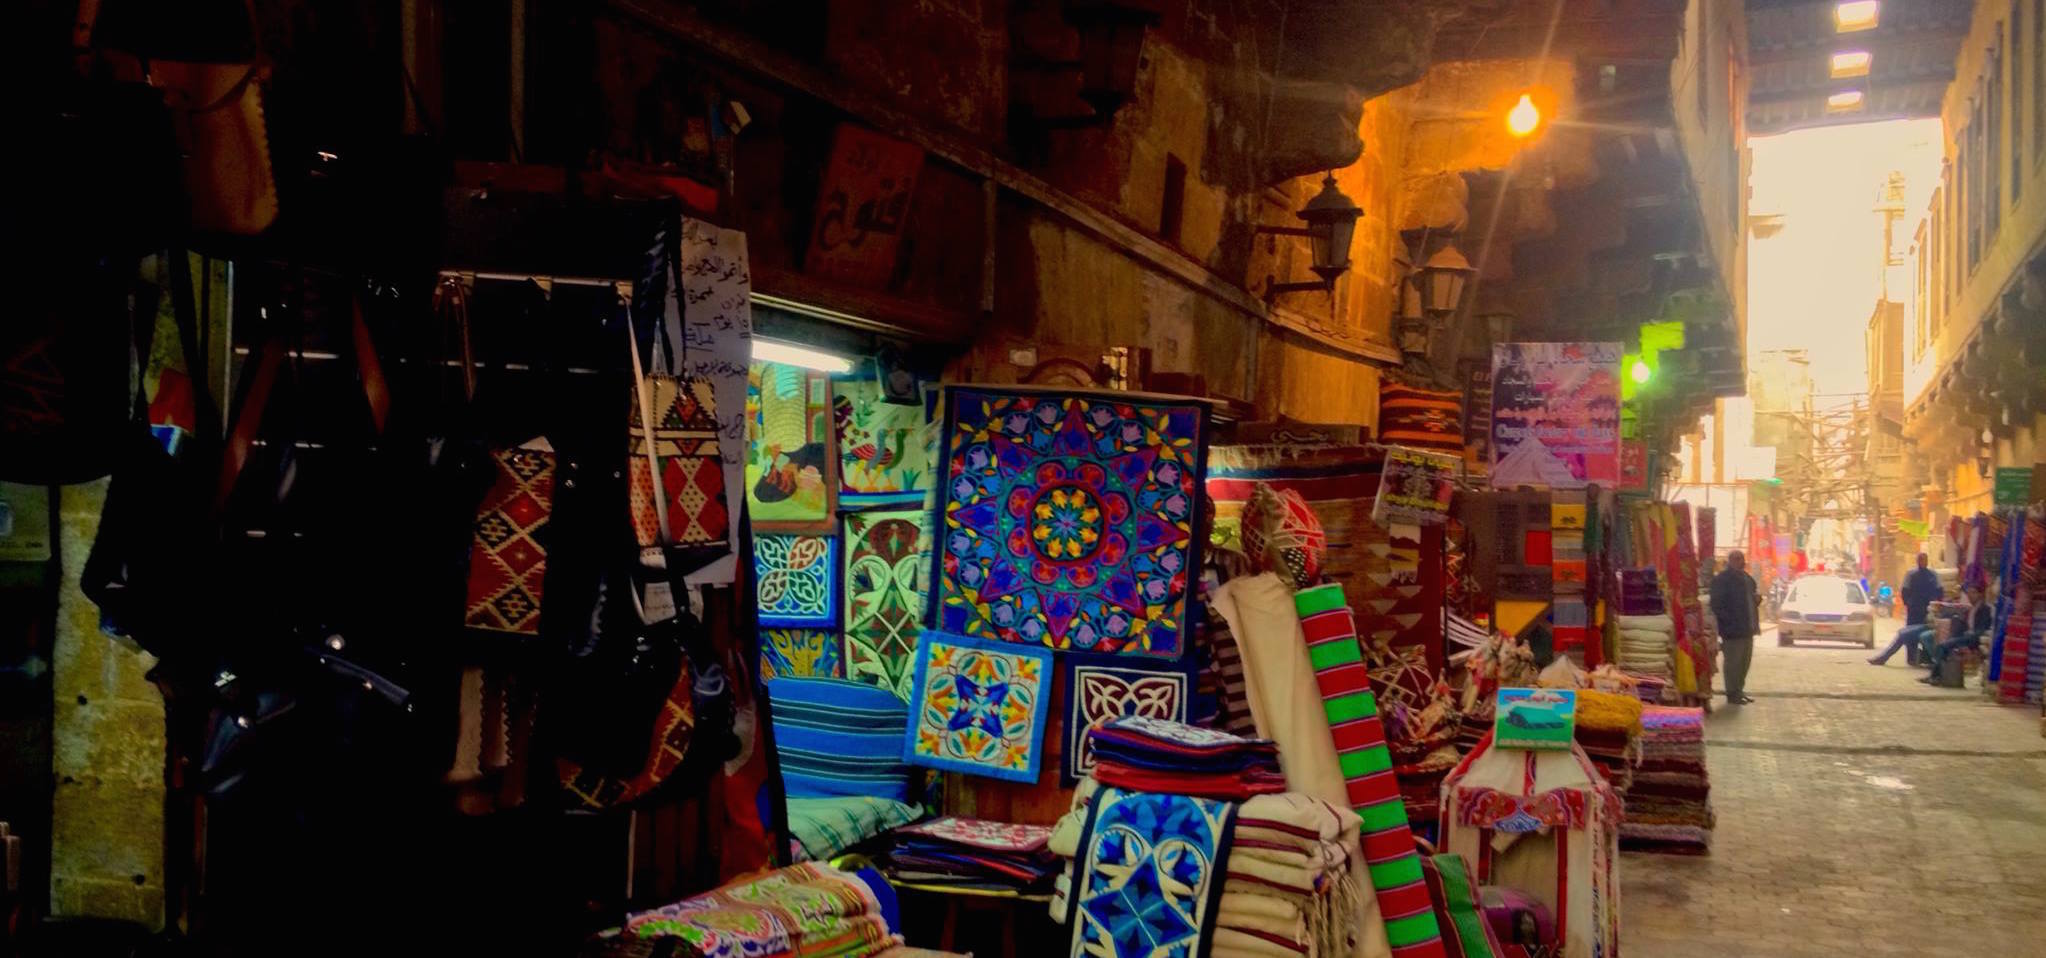 Market stall showcasing colourful textiles